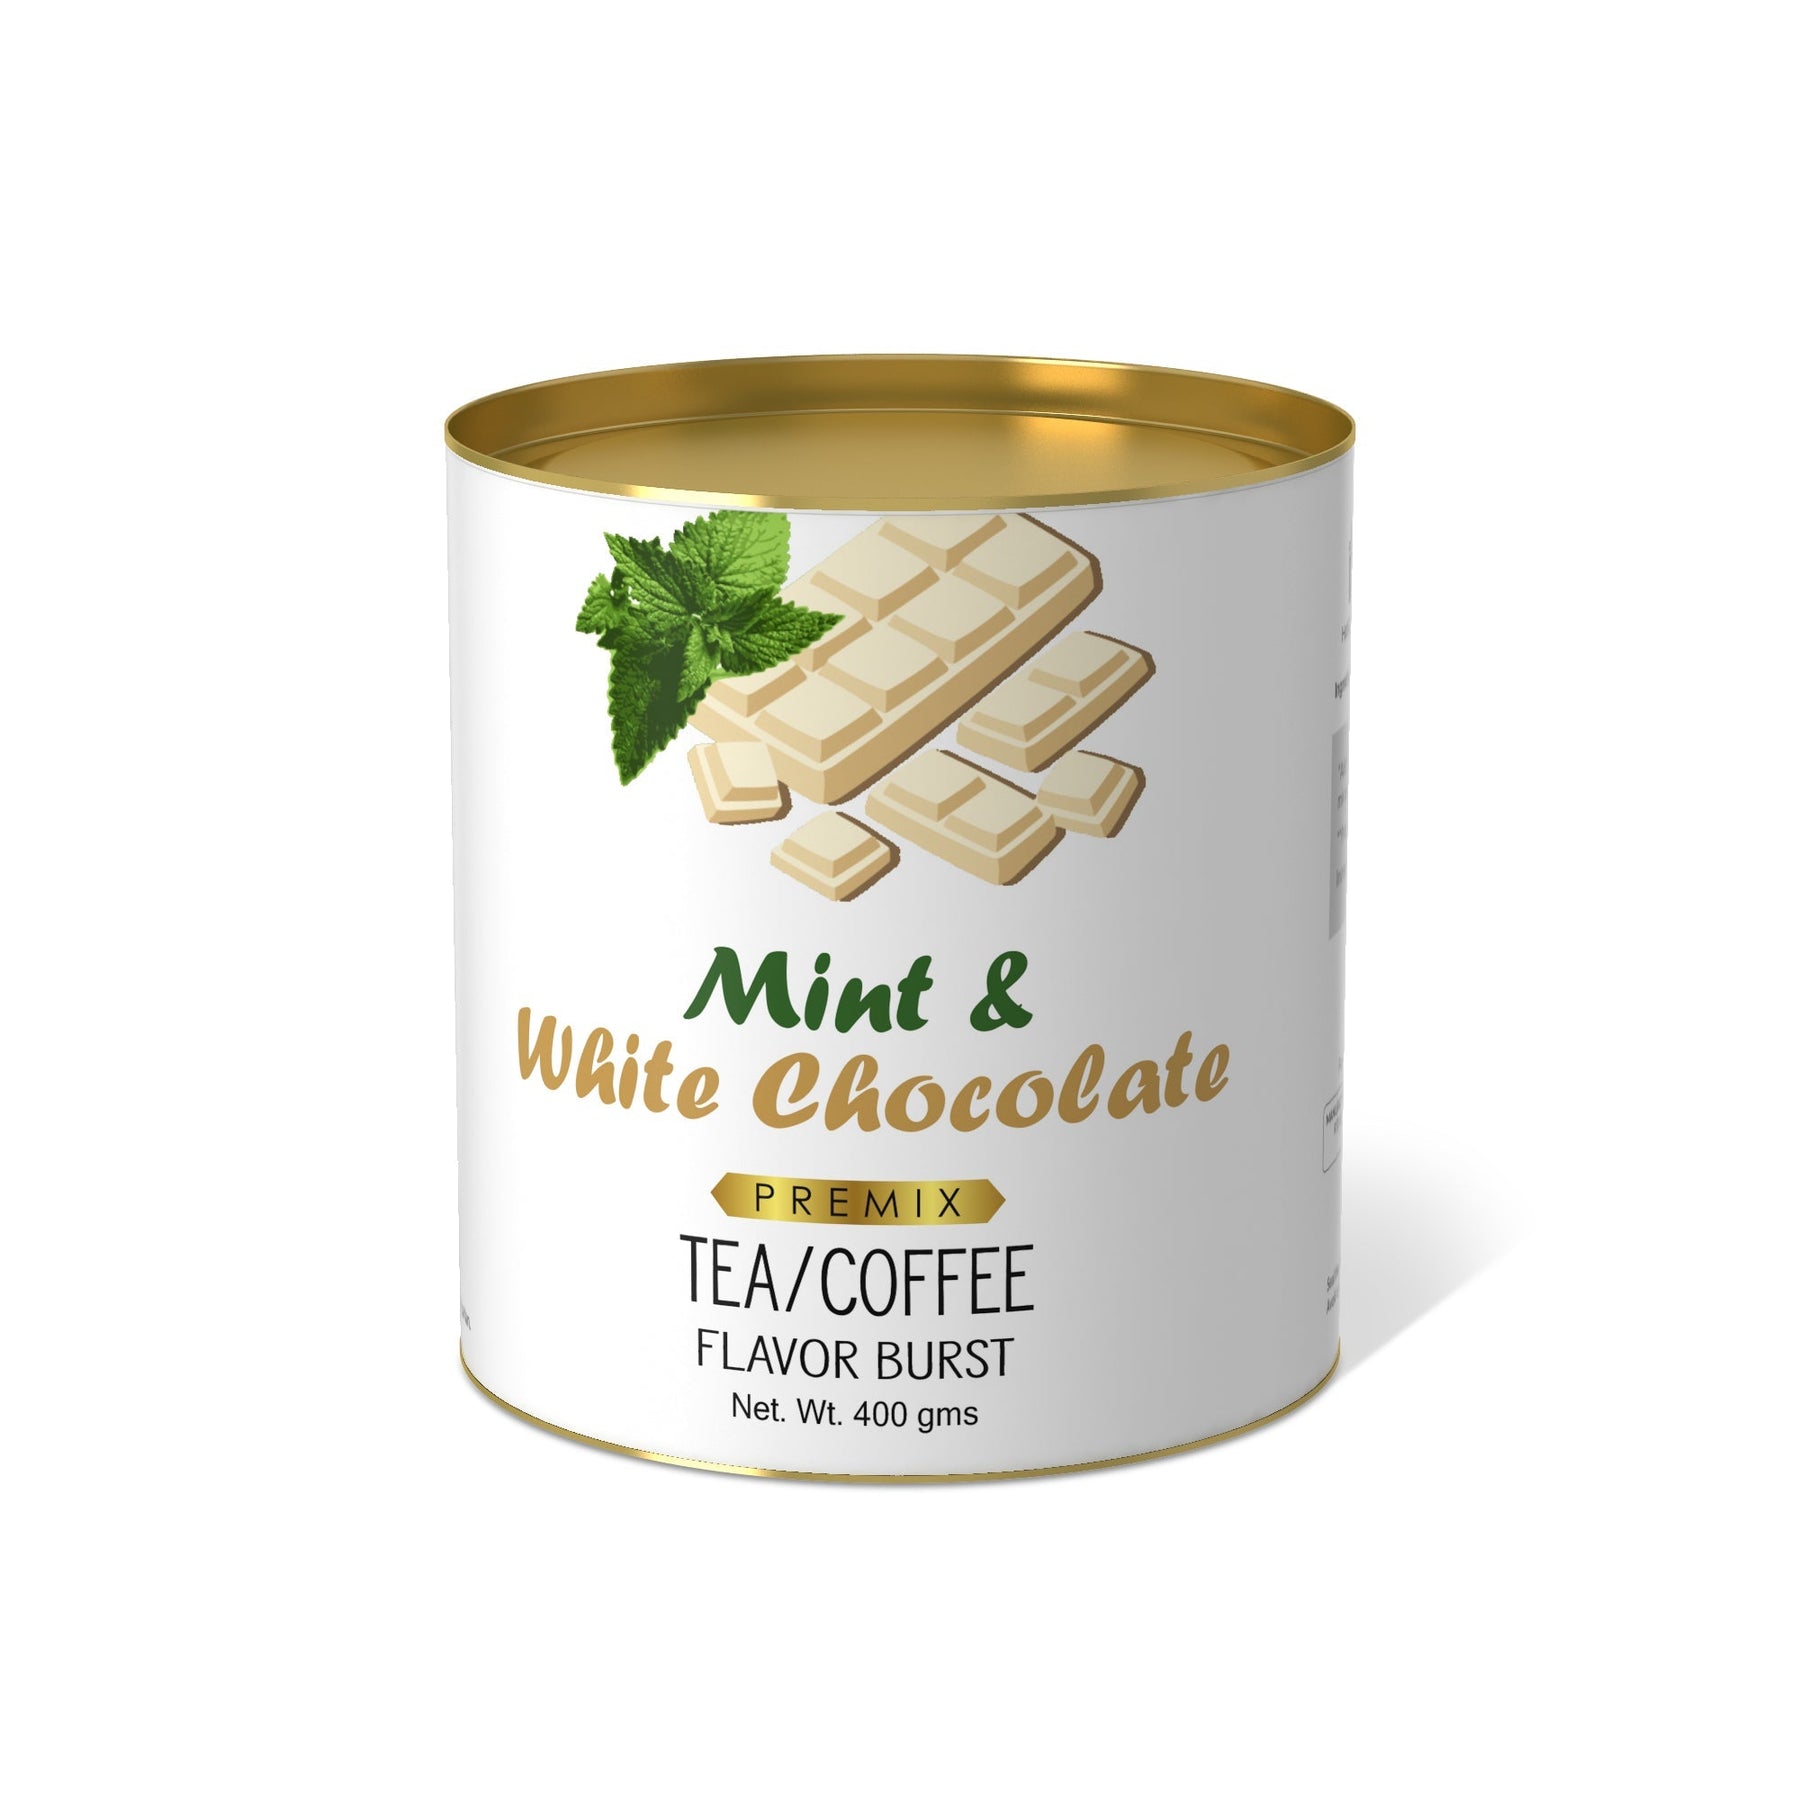 Mint & White Chocolate Flavor Burst - 400 gms